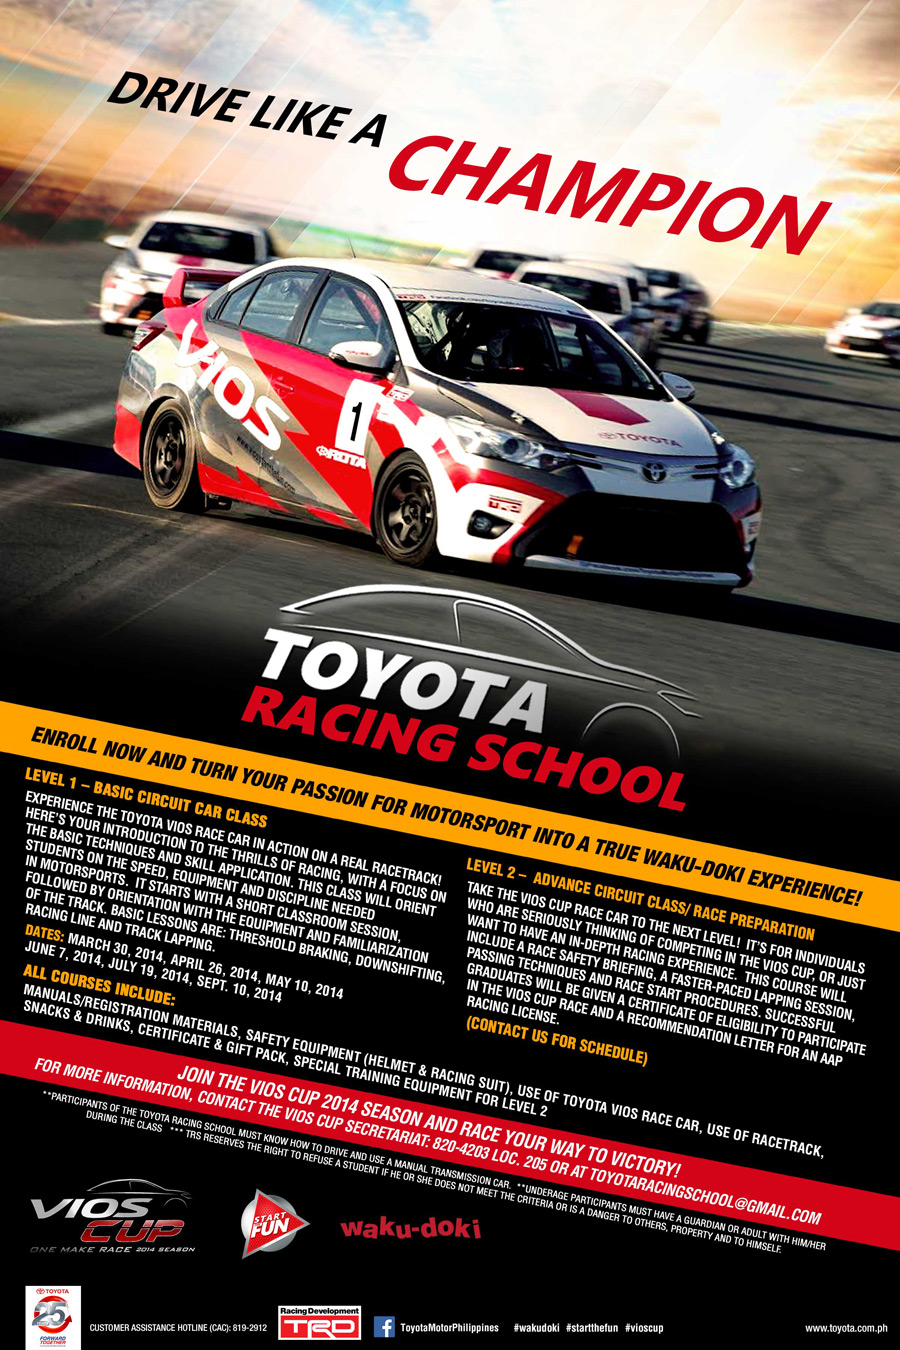 Toyota Racing School